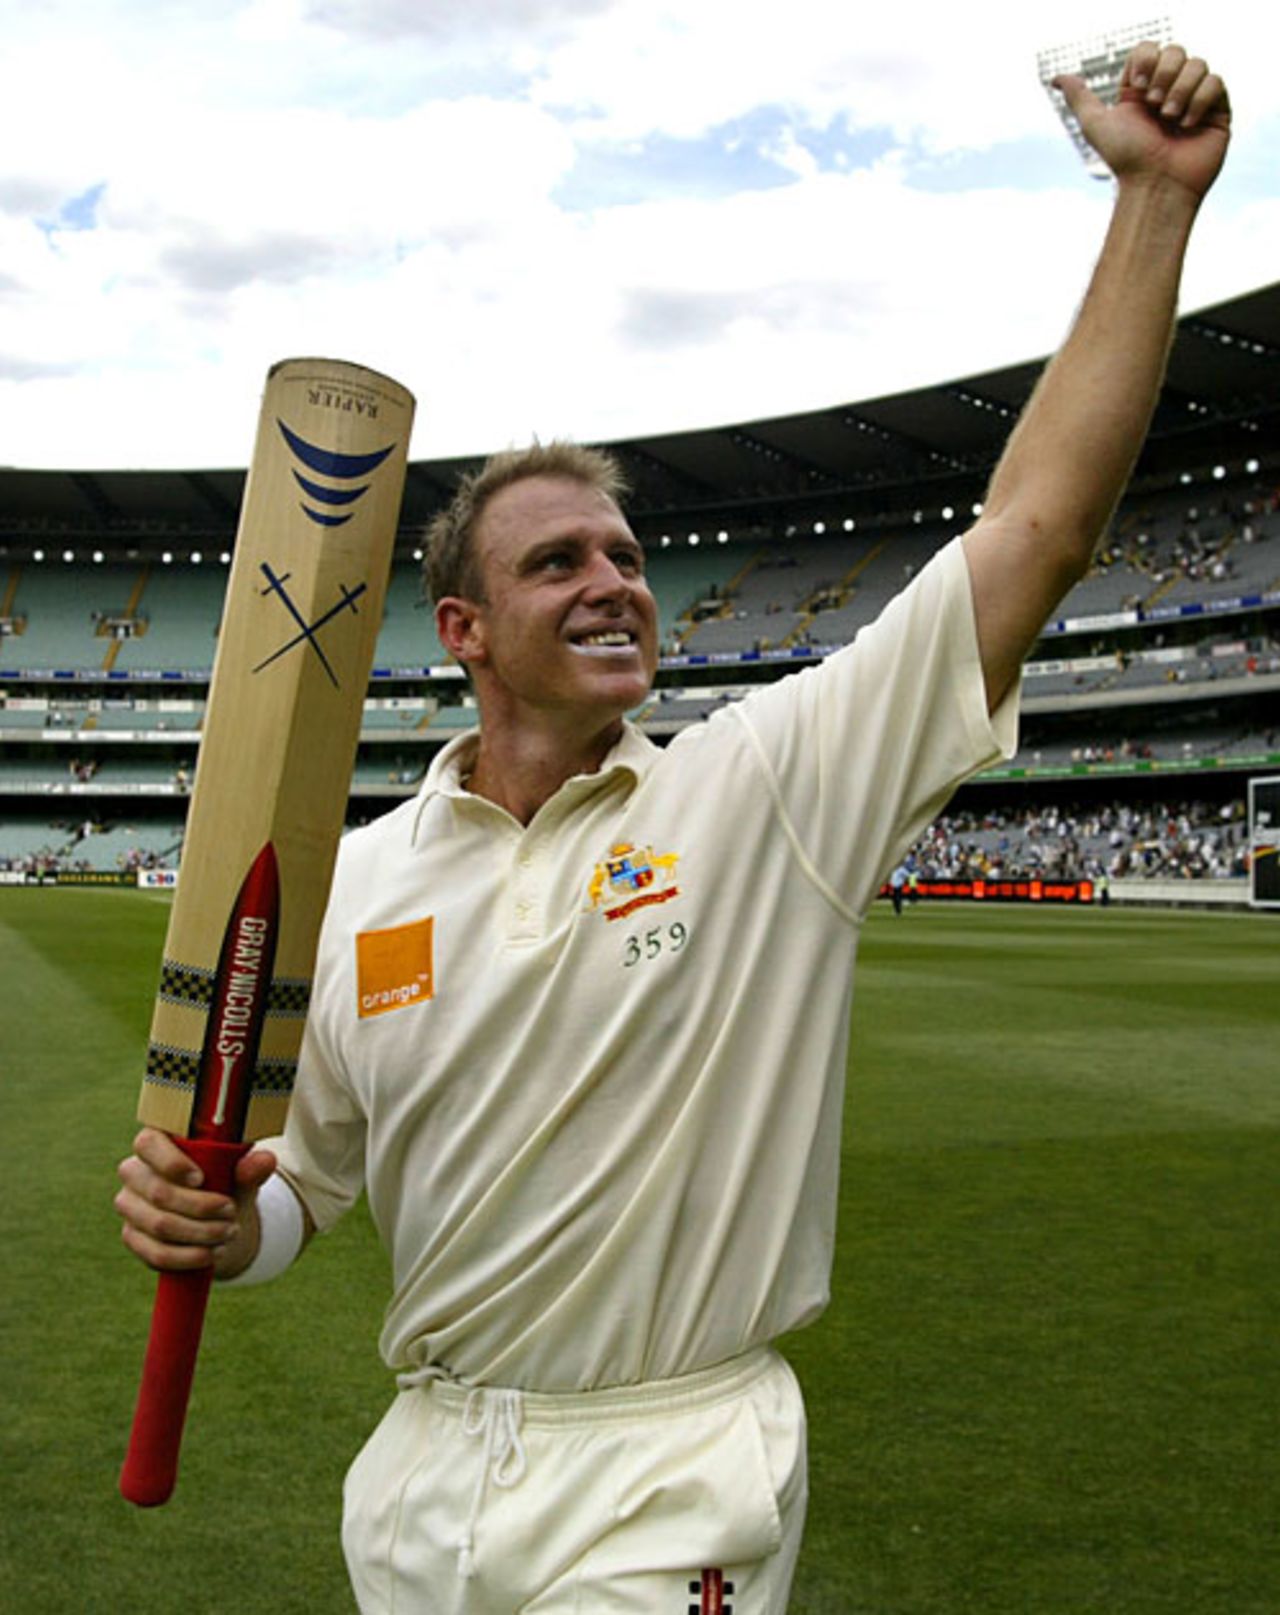 Matthew Hayden is ecstatic after Australia's nine-wicket win, Australia v South Africa, 2nd Test, Melbourne, 4th day, December 29, 2001